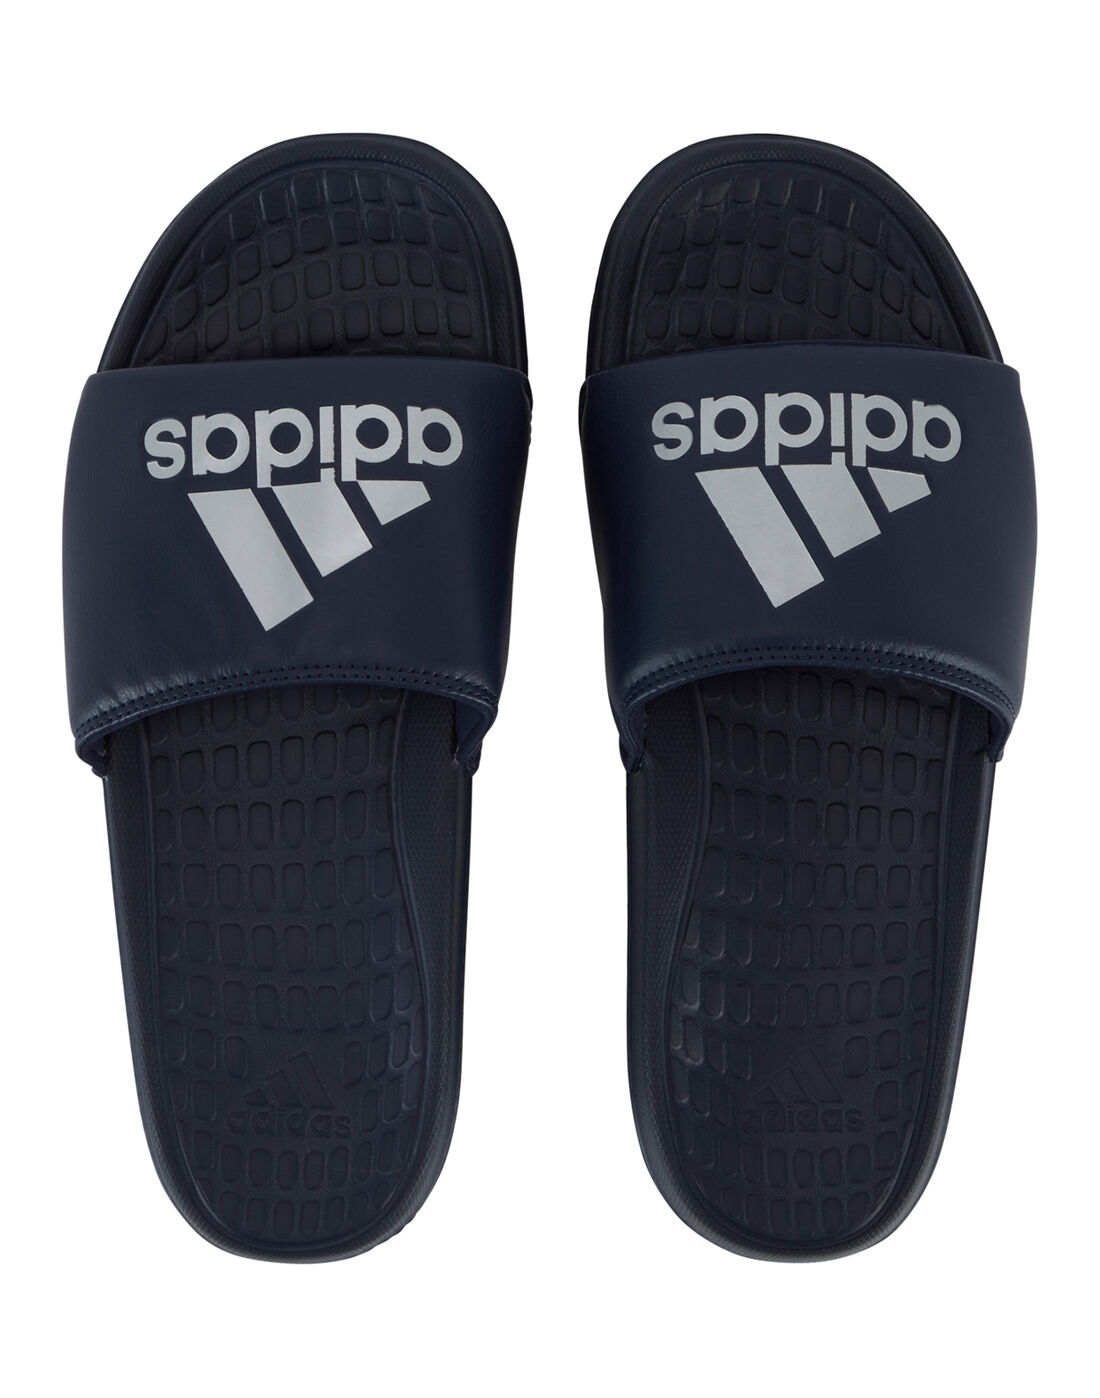 adidas men's voloomix slide sandal